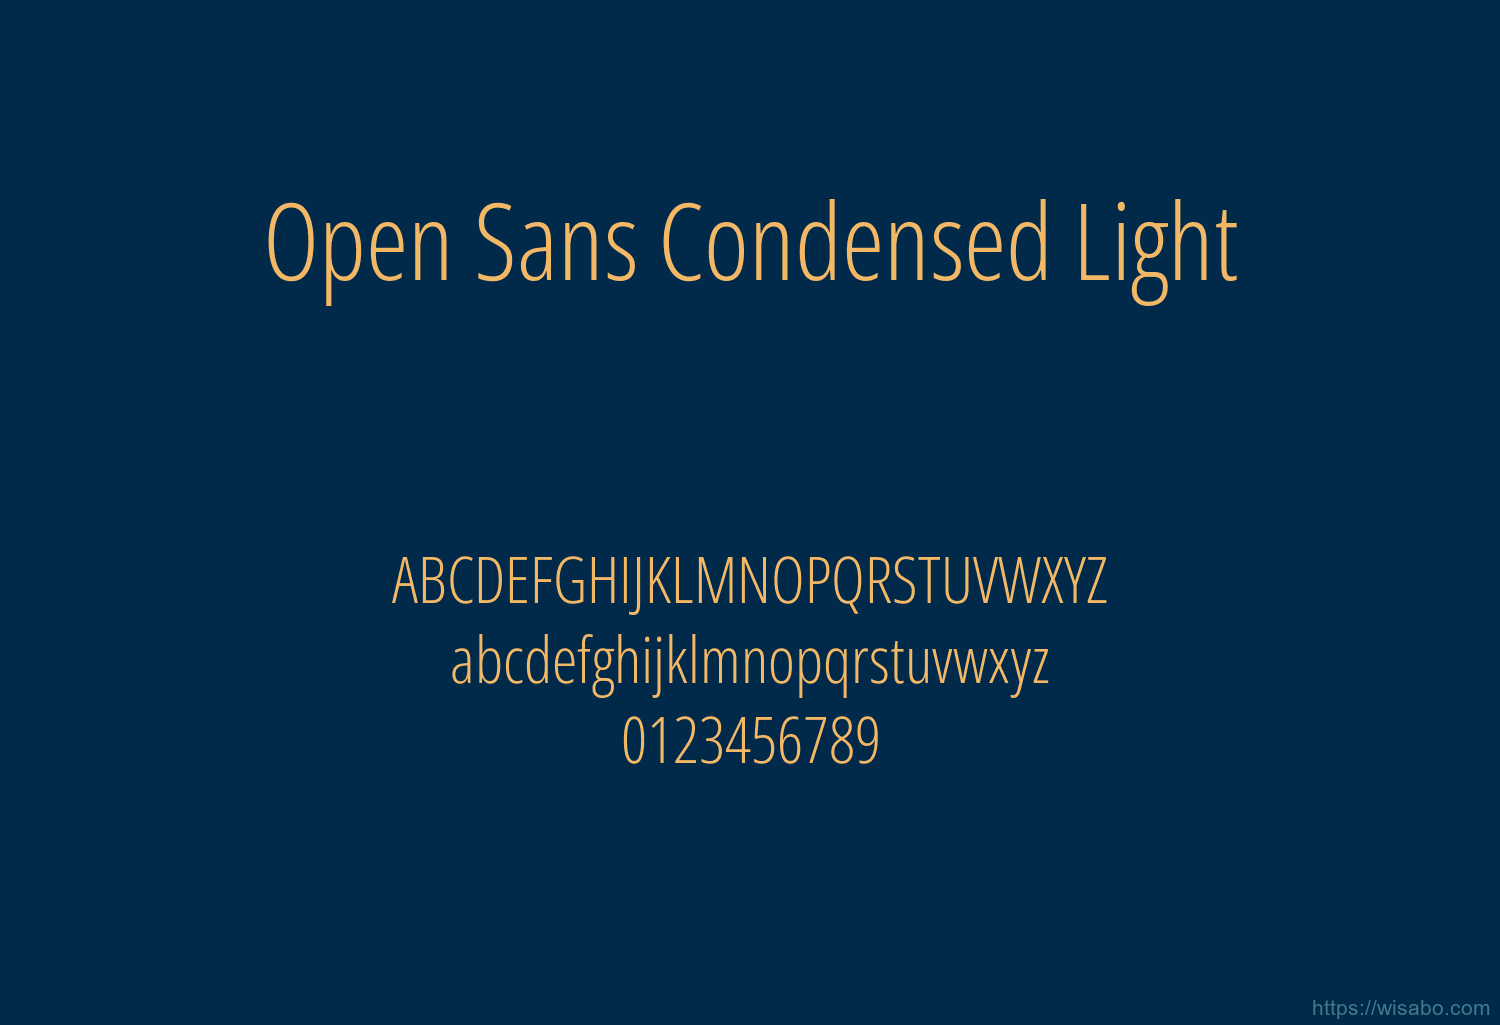 Open Sans Condensed Light